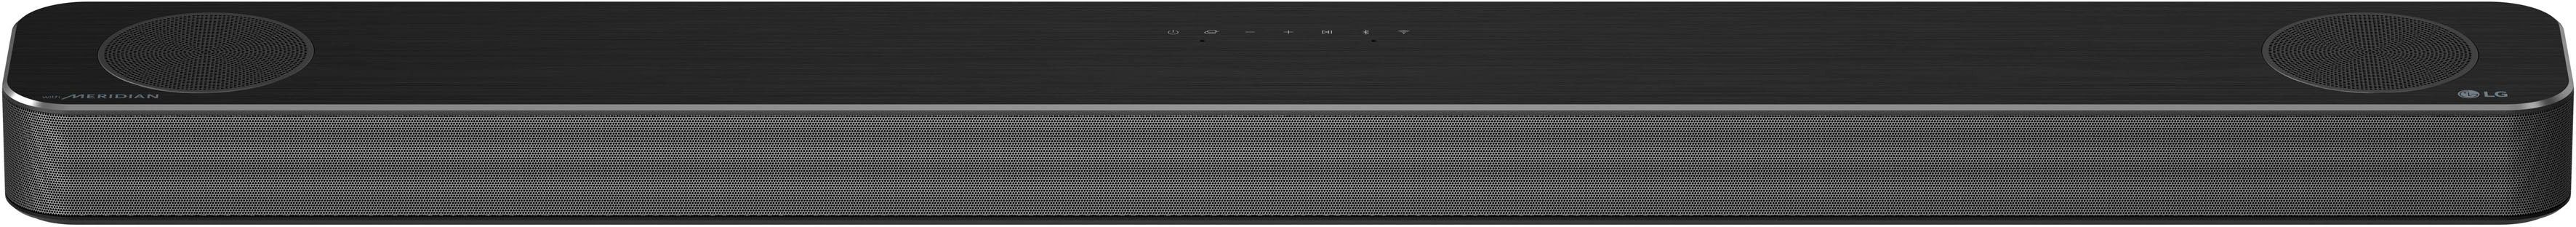 3.1.2 Soundbar WLAN LG SPD75YA W) 400 (Bluetooth, (WiFi),